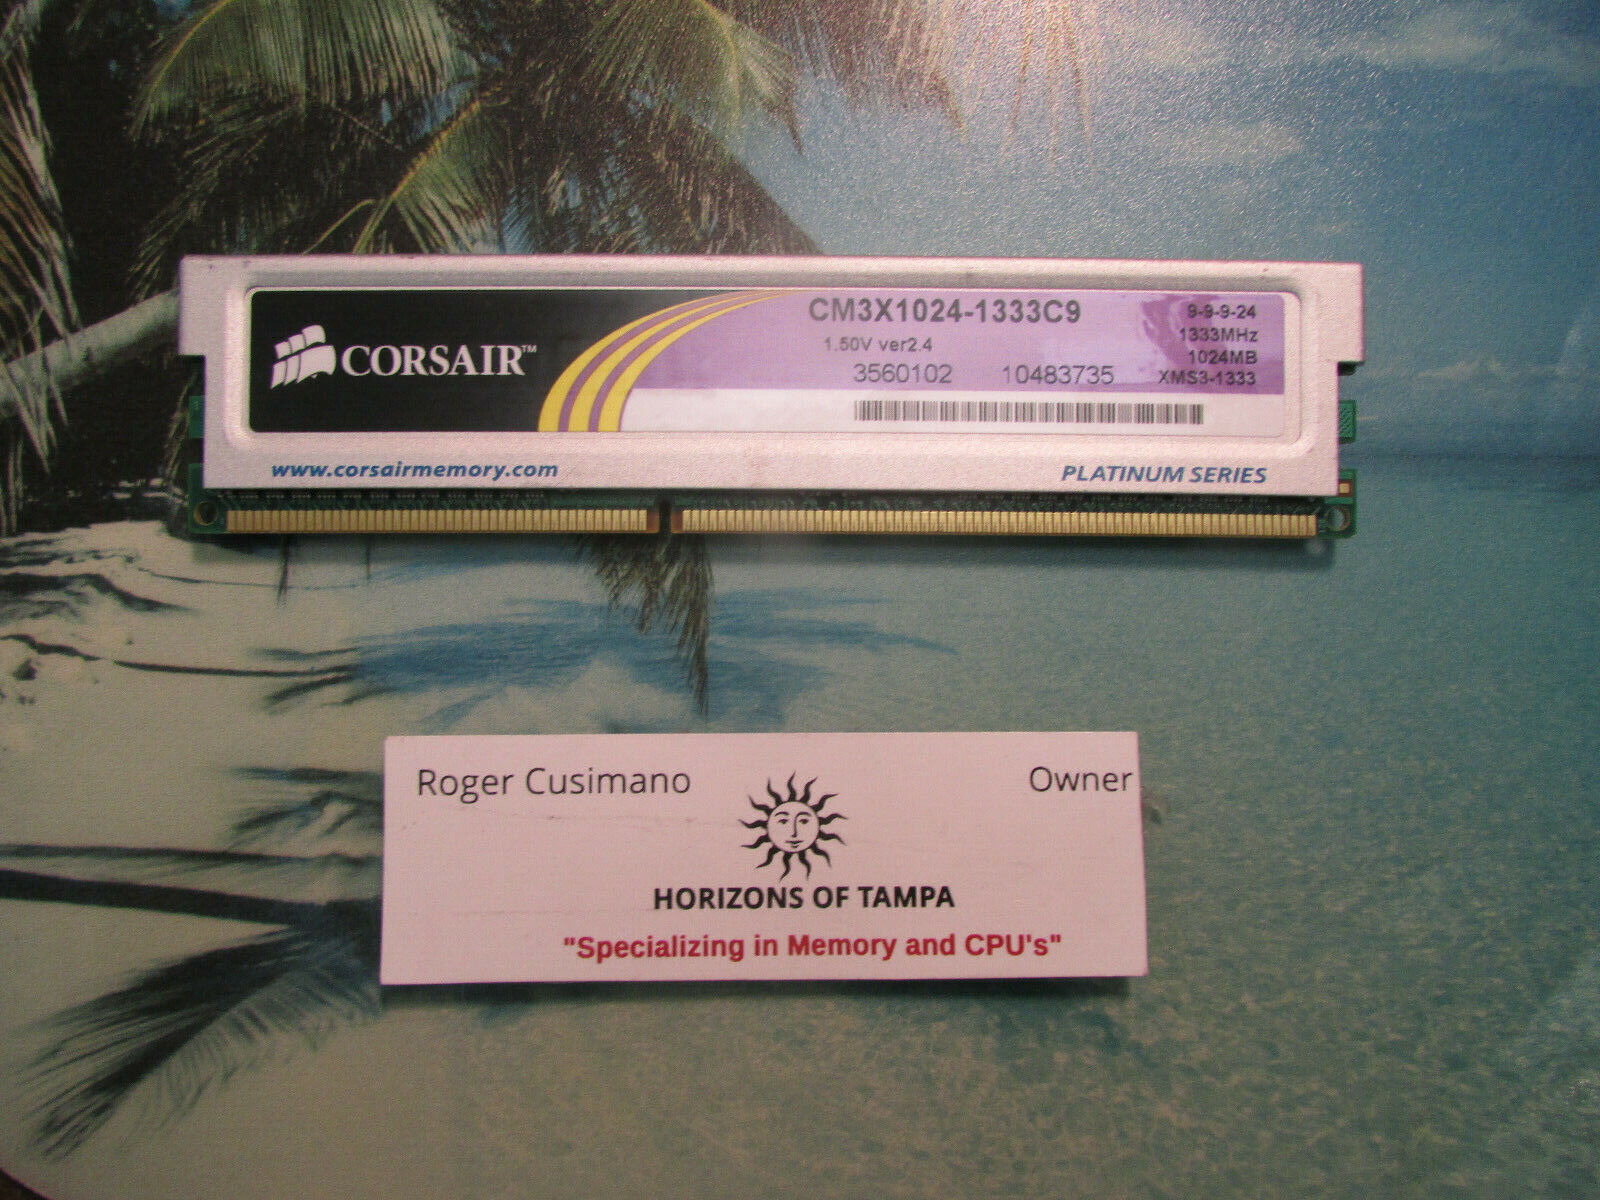 Corsair XMS3 DDR3 CM3X1024-1333C9 1024MB 3GB (3 x 1GB)